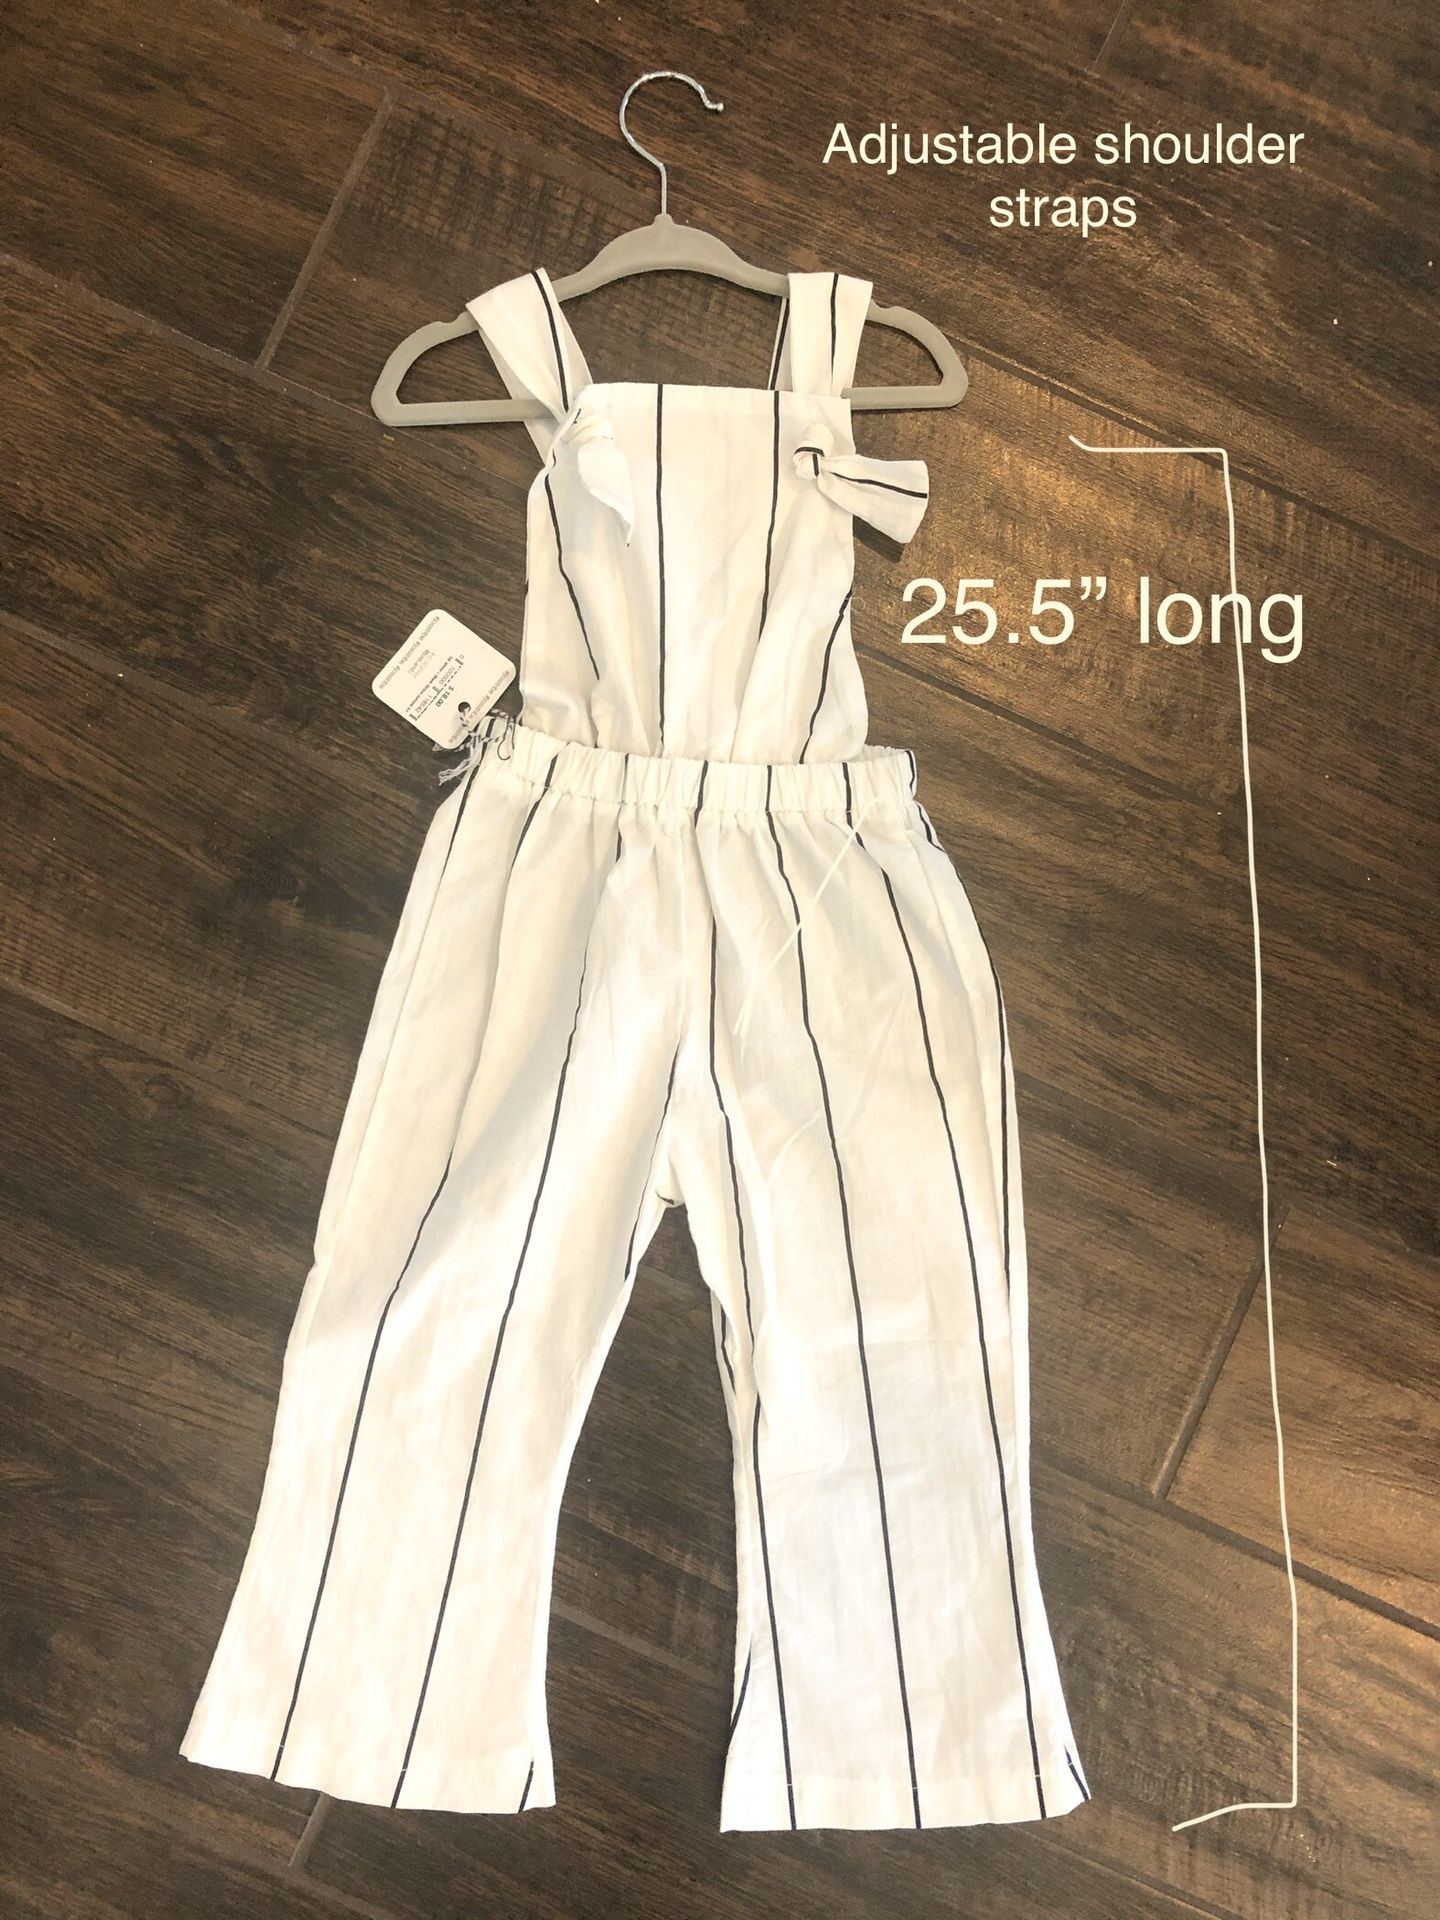 2T white and black striped overalls